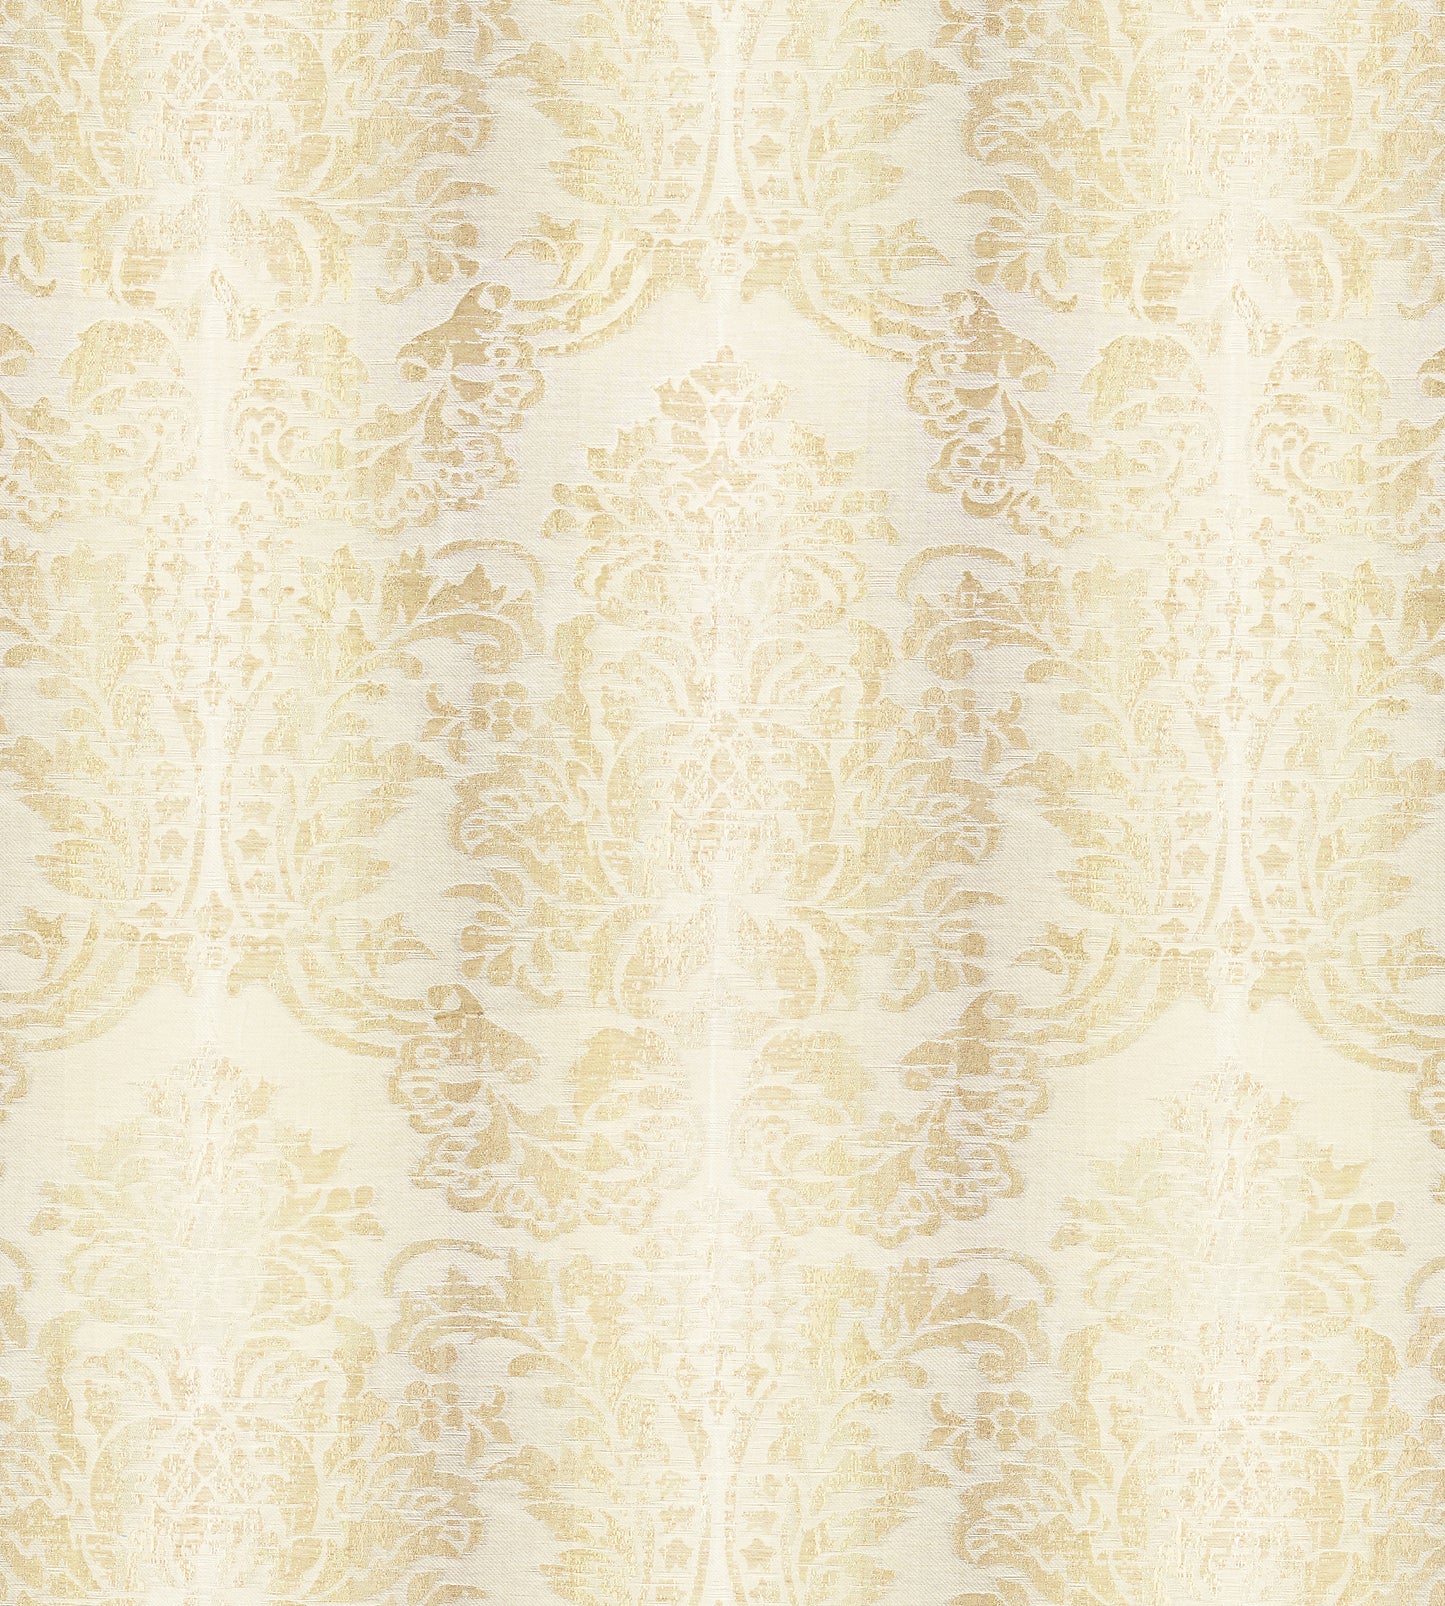 Purchase Scalamandre Fabric Product# SC 000127093, Sorrento Linen Damask Parchment 3